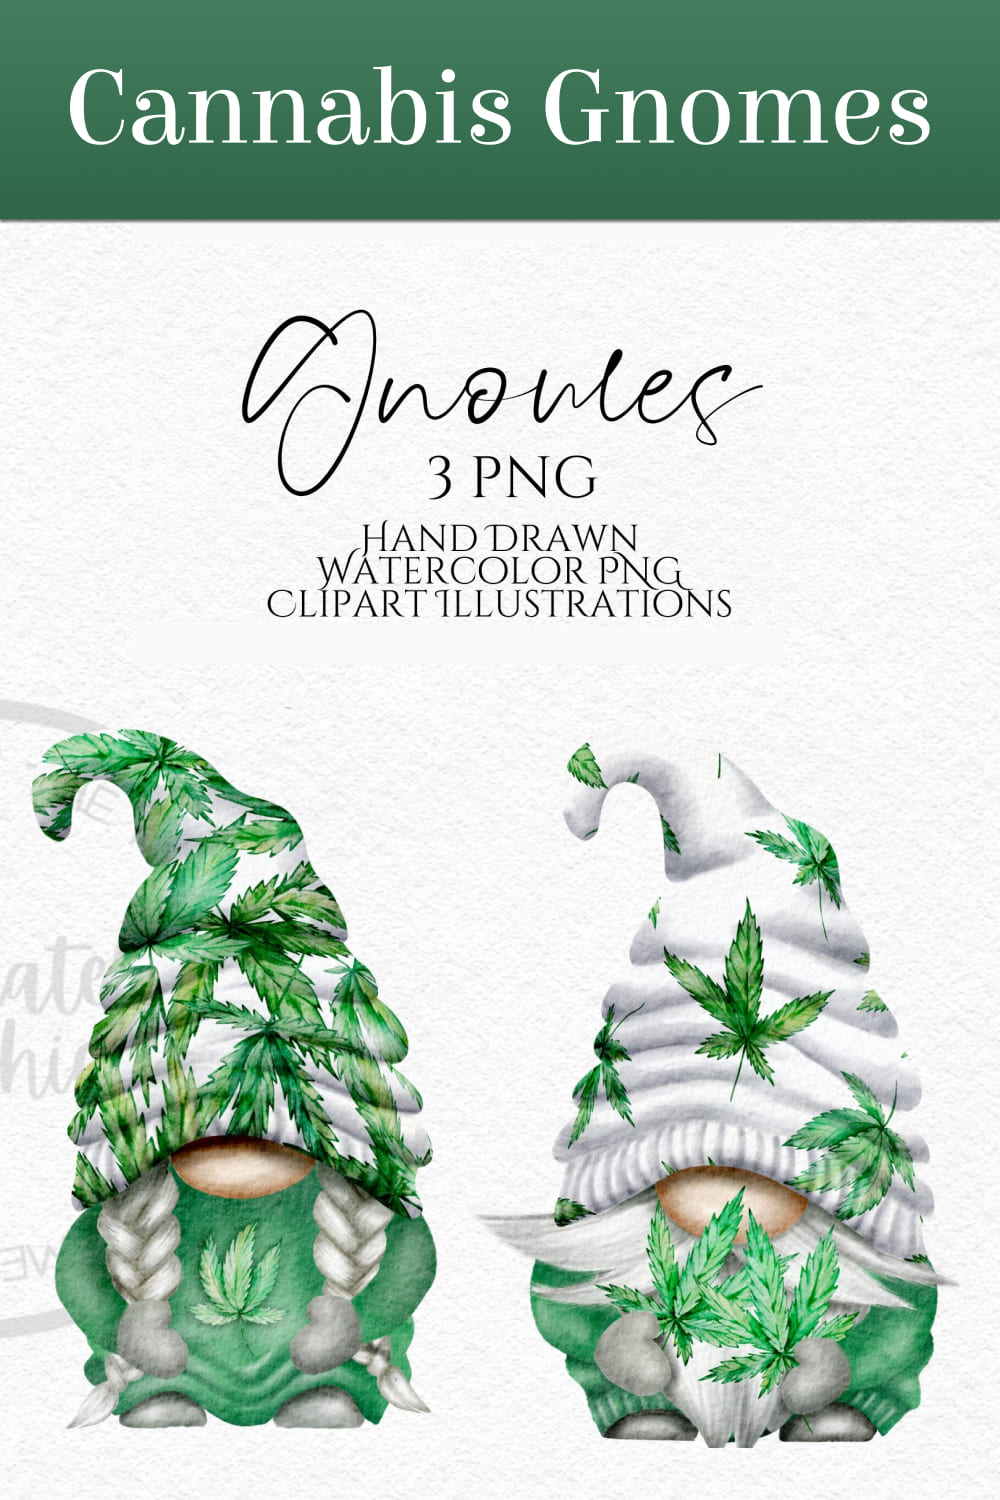 Cannabis Gnomes Marijuana Gonk - pinterest image preview.